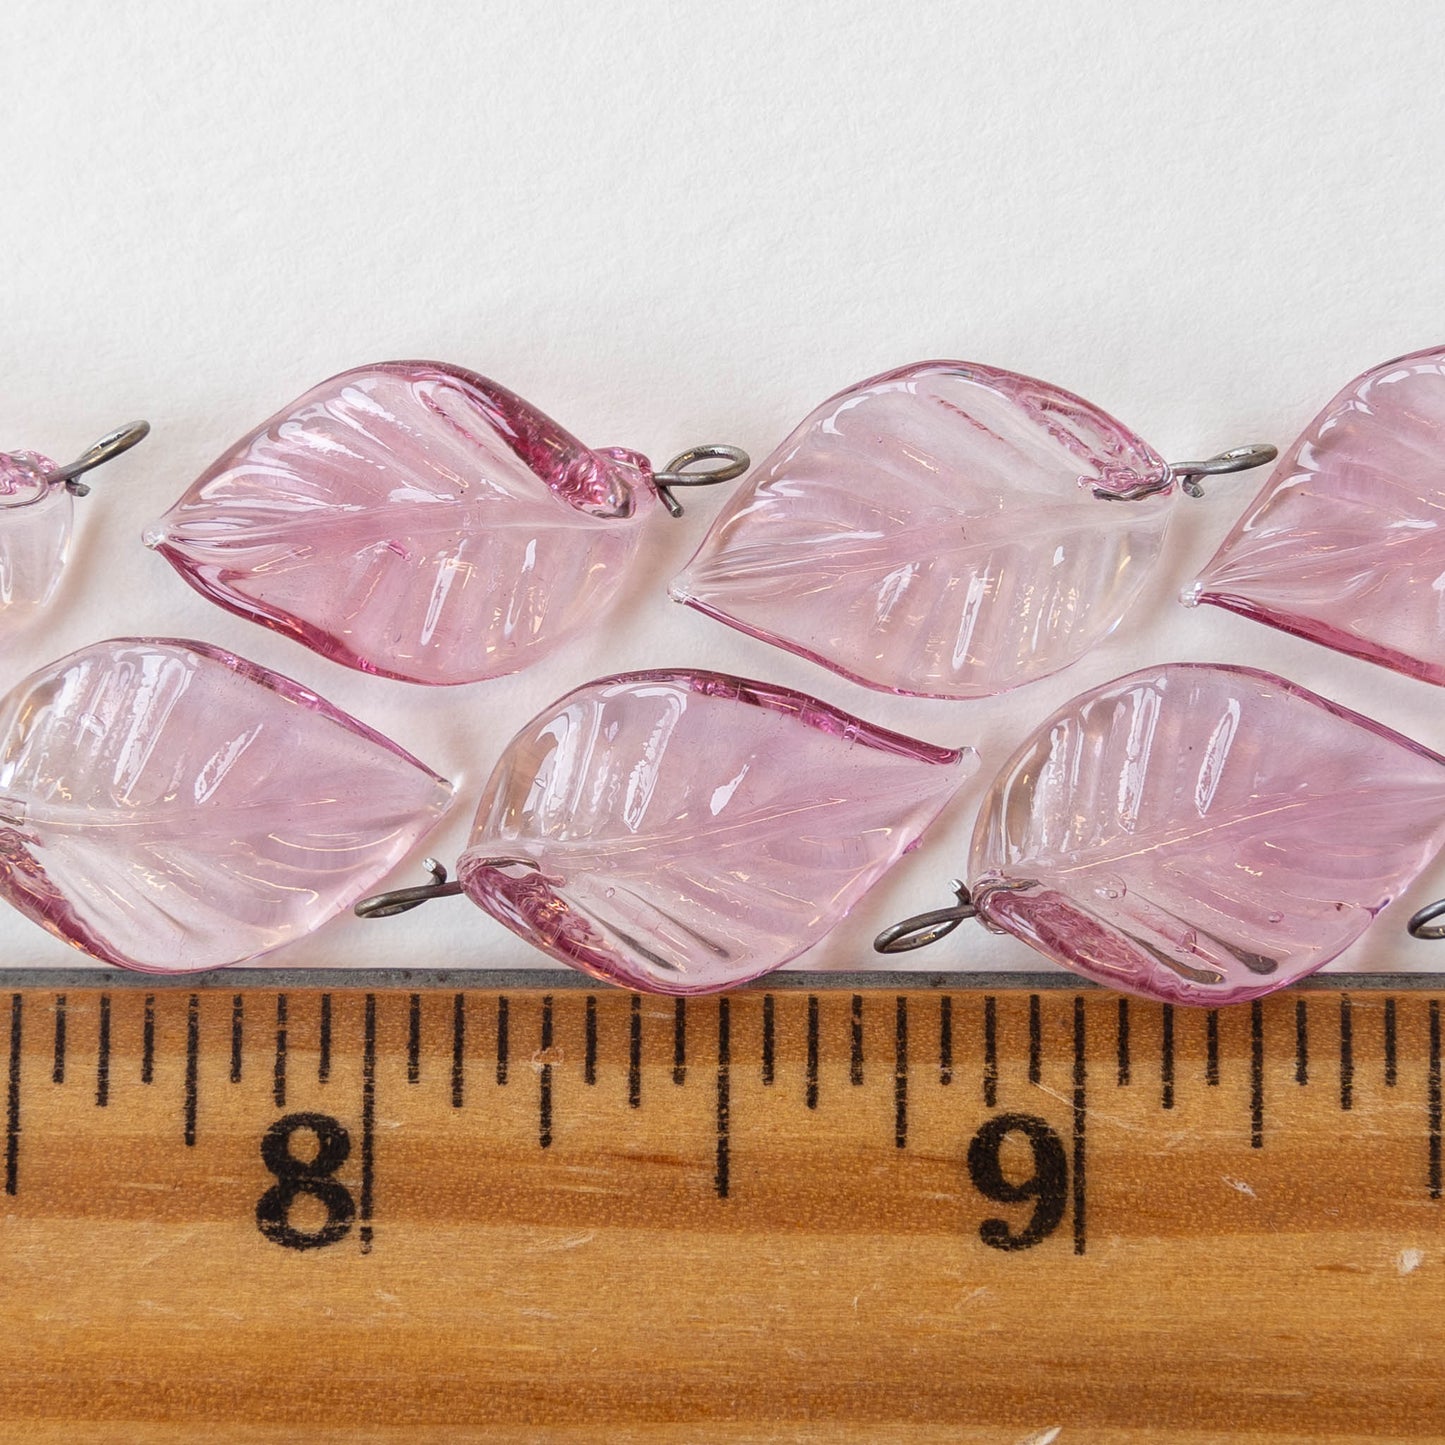 Handmade Glass Leaf Beads - Pink - 2 leaves